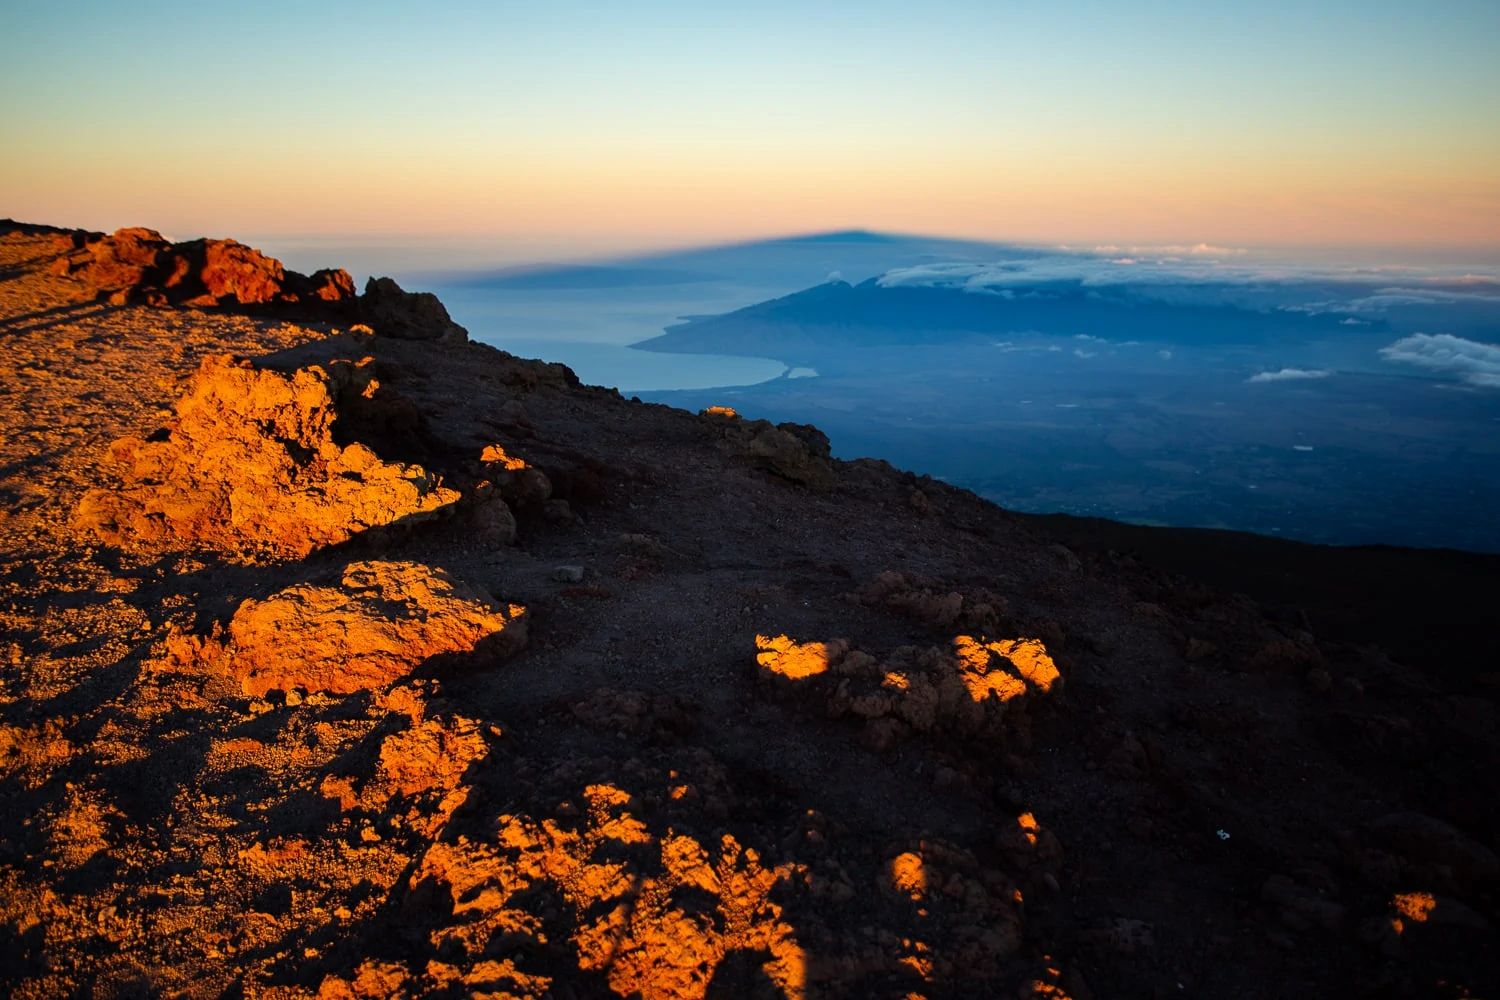 Haleakala elopement photographer Lucy Schultz showcases the sunrise light at the summit of Maui's volcano.